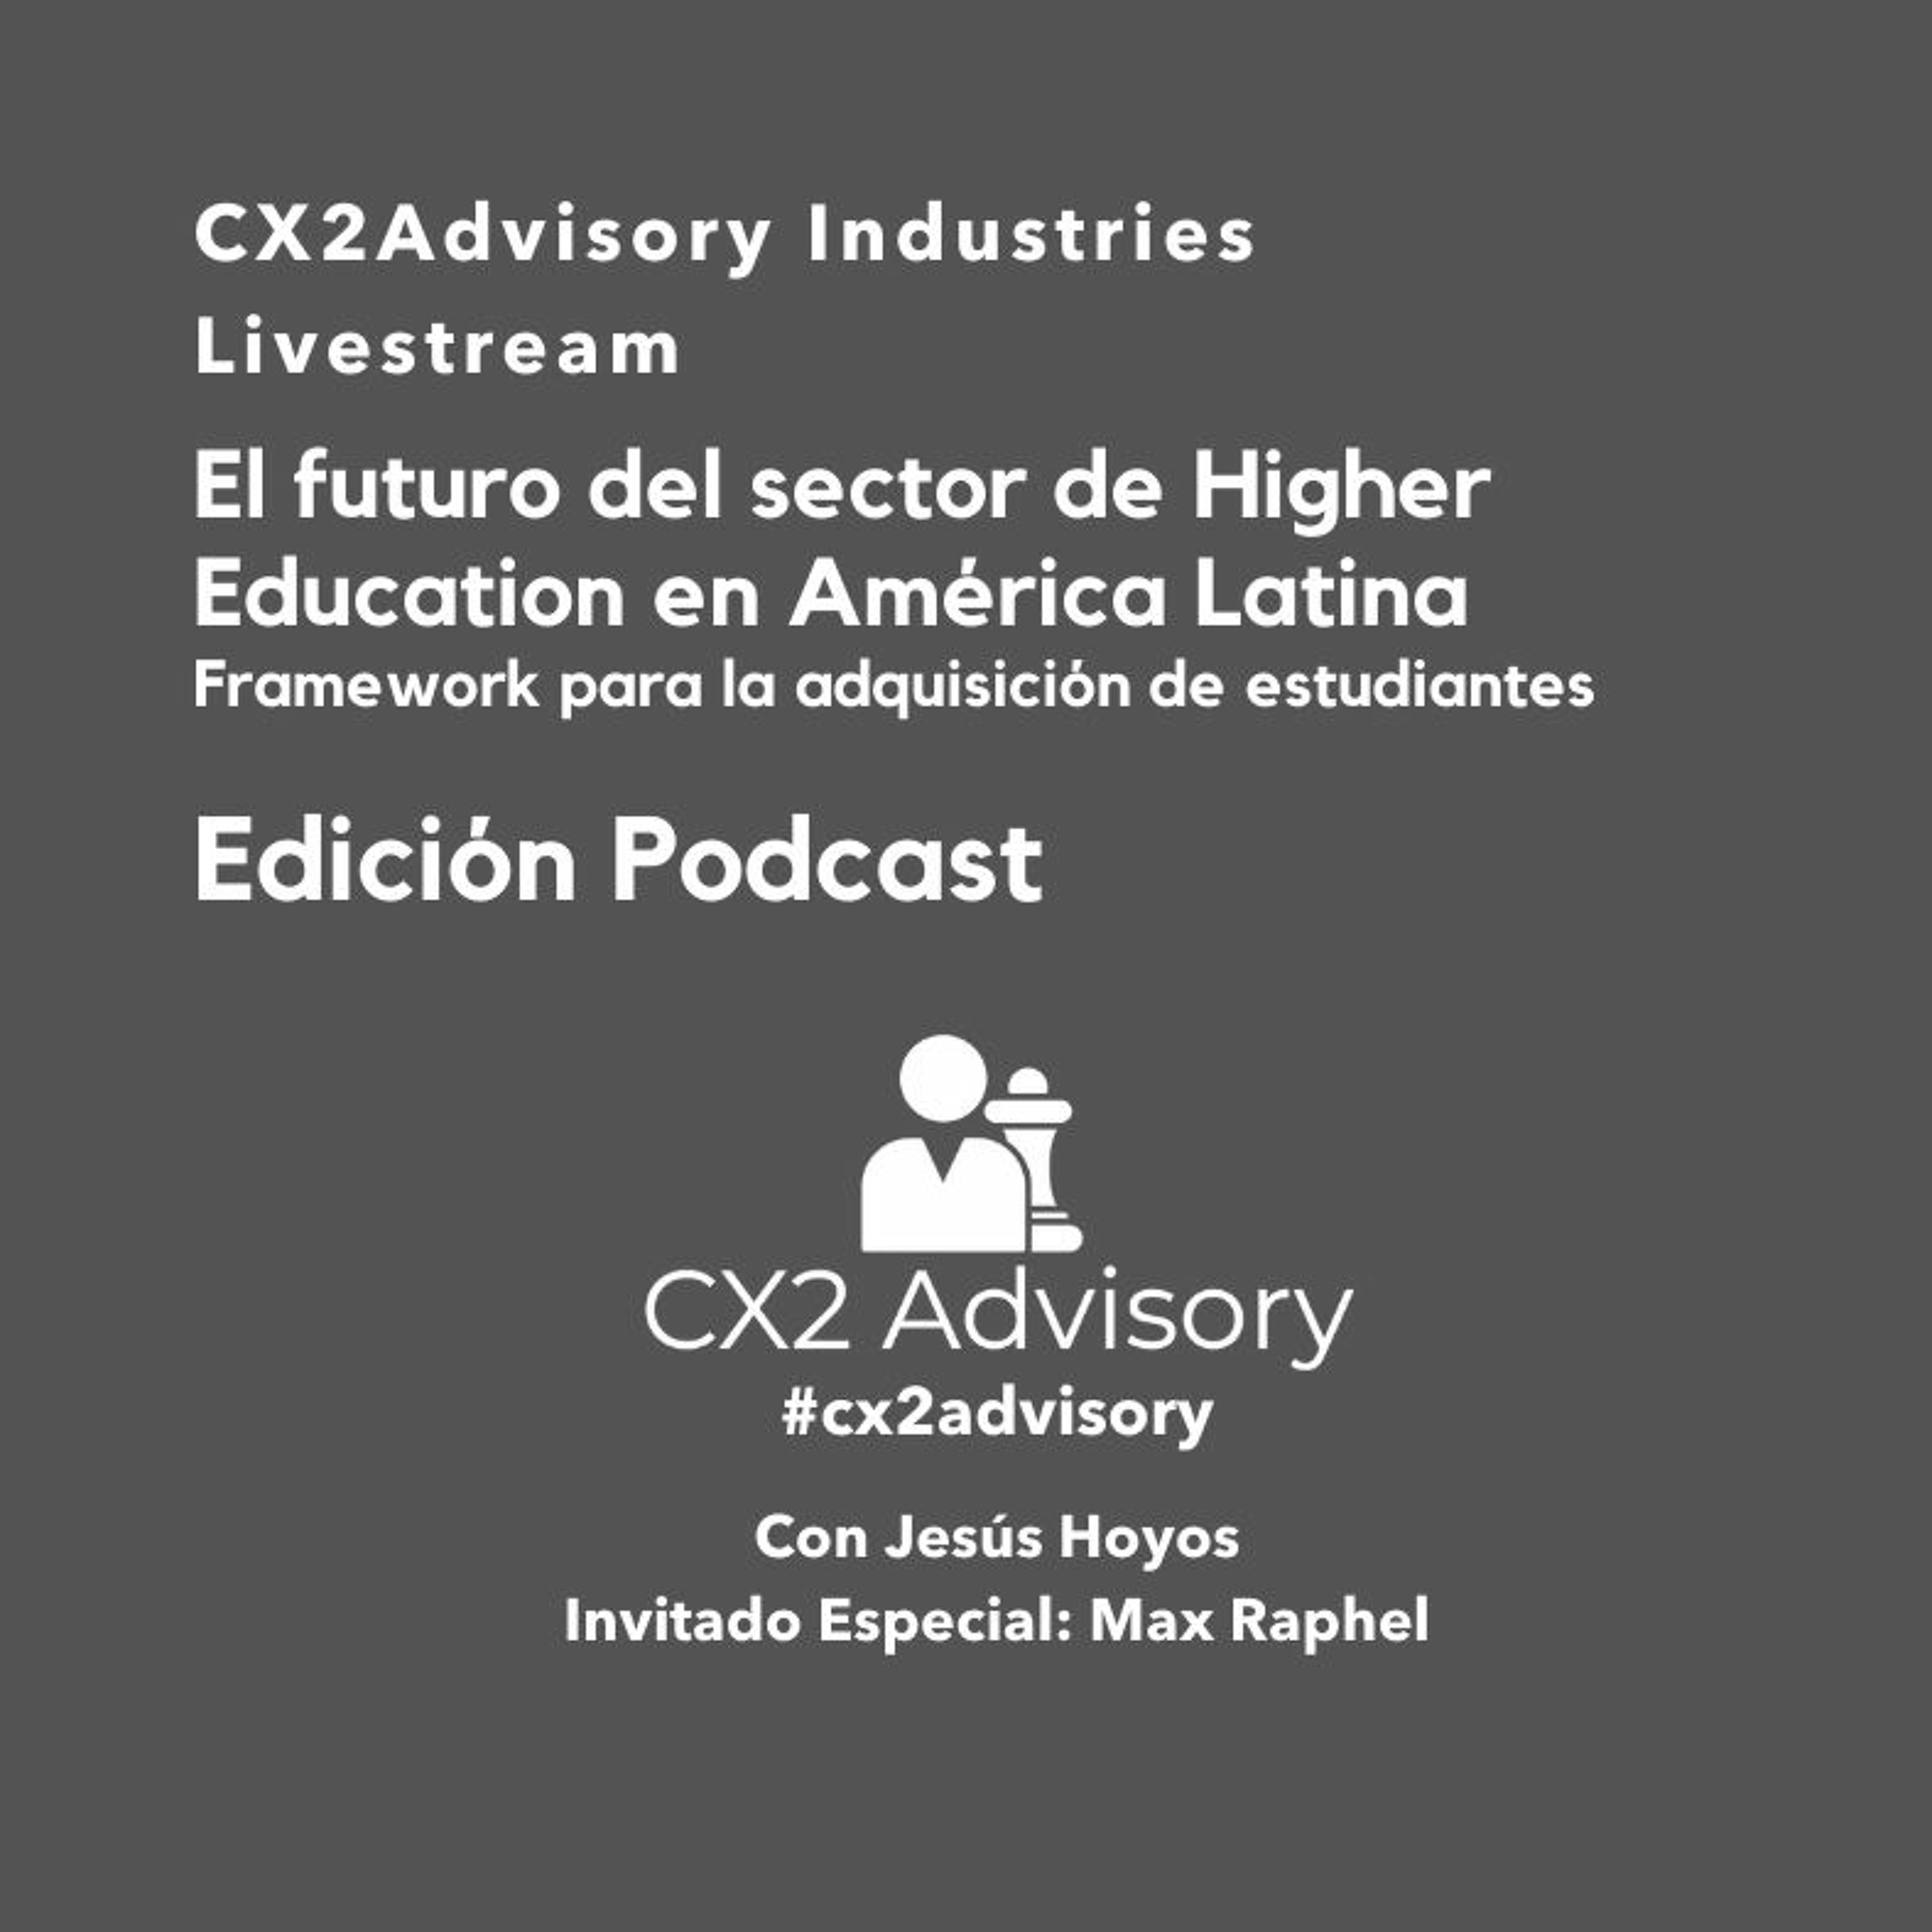 Edición Podcast: #CX2Advisory Industries  Higher Education En América Latina